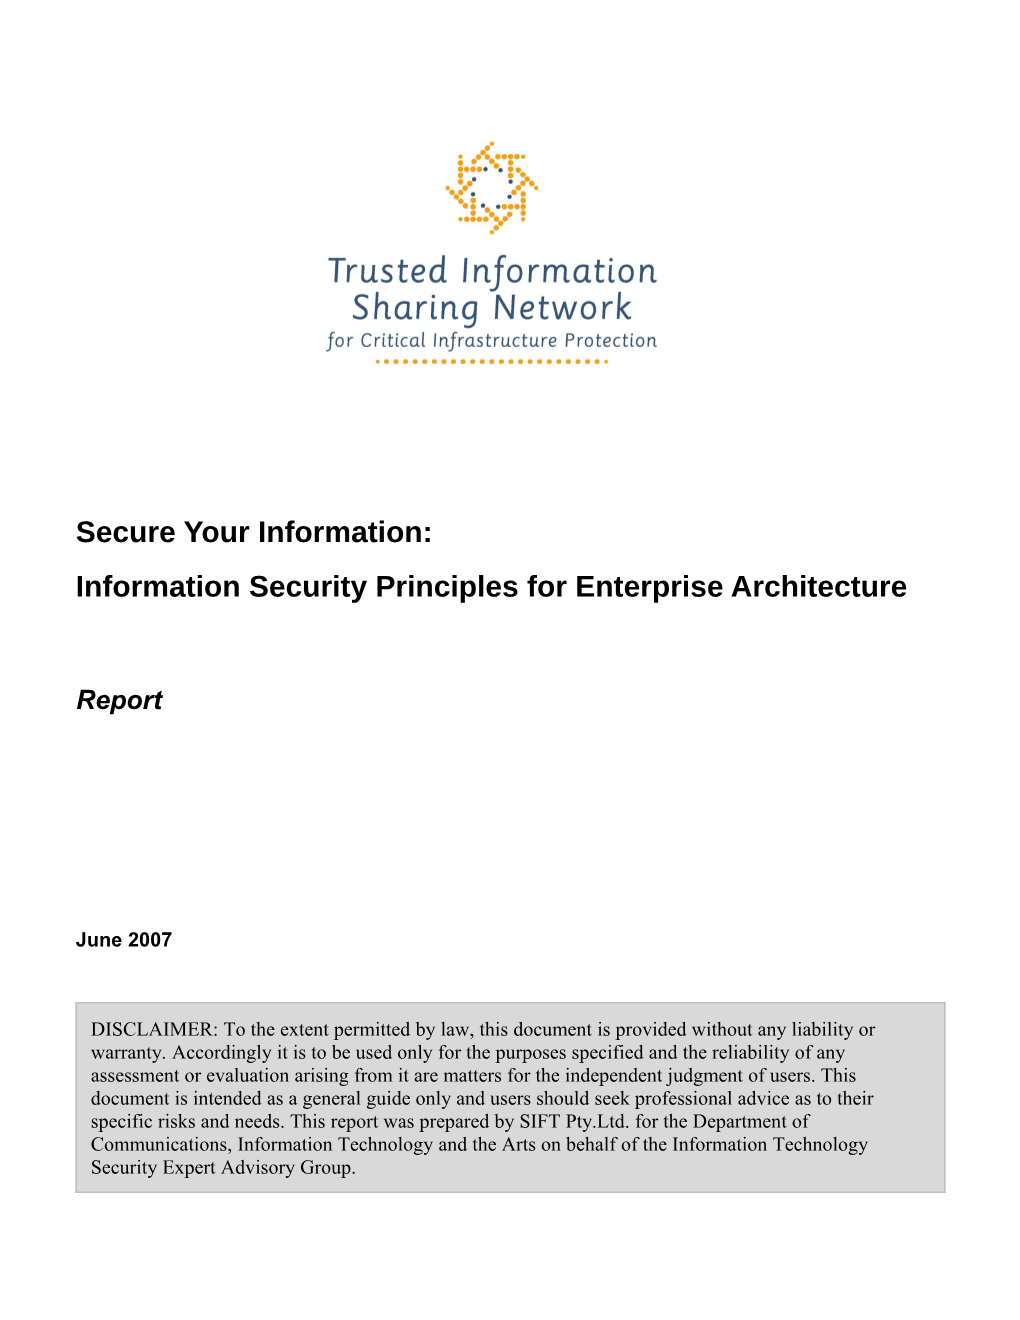 Secure Your Information - Information Security Principles for Enterprise Architecture